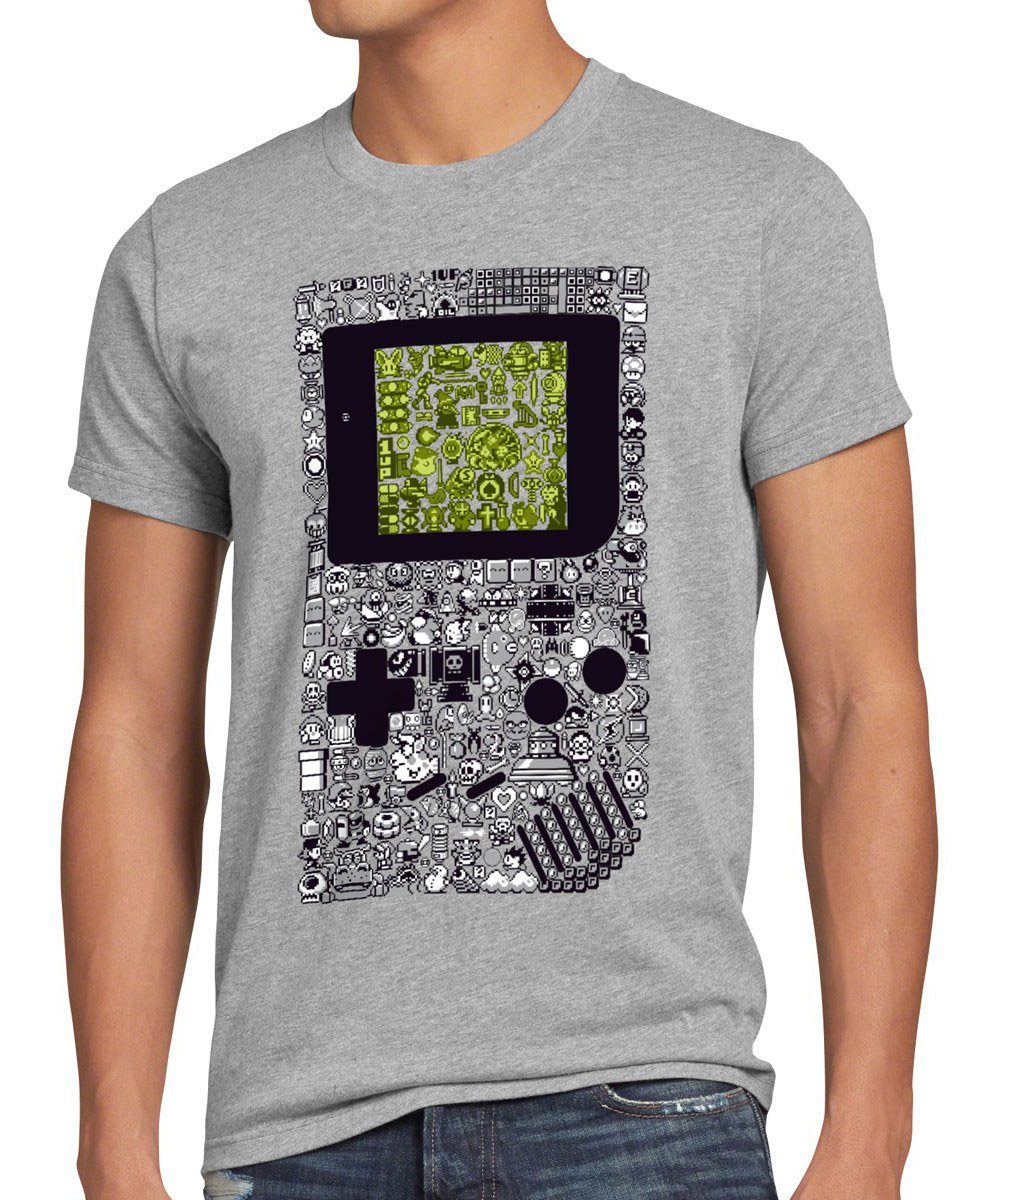 style3 Print-Shirt Herren T-Shirt 8Bit Gamer T-Shirt retro gaming boy switch nes wii luigi yoshi color n64 classic grau meliert